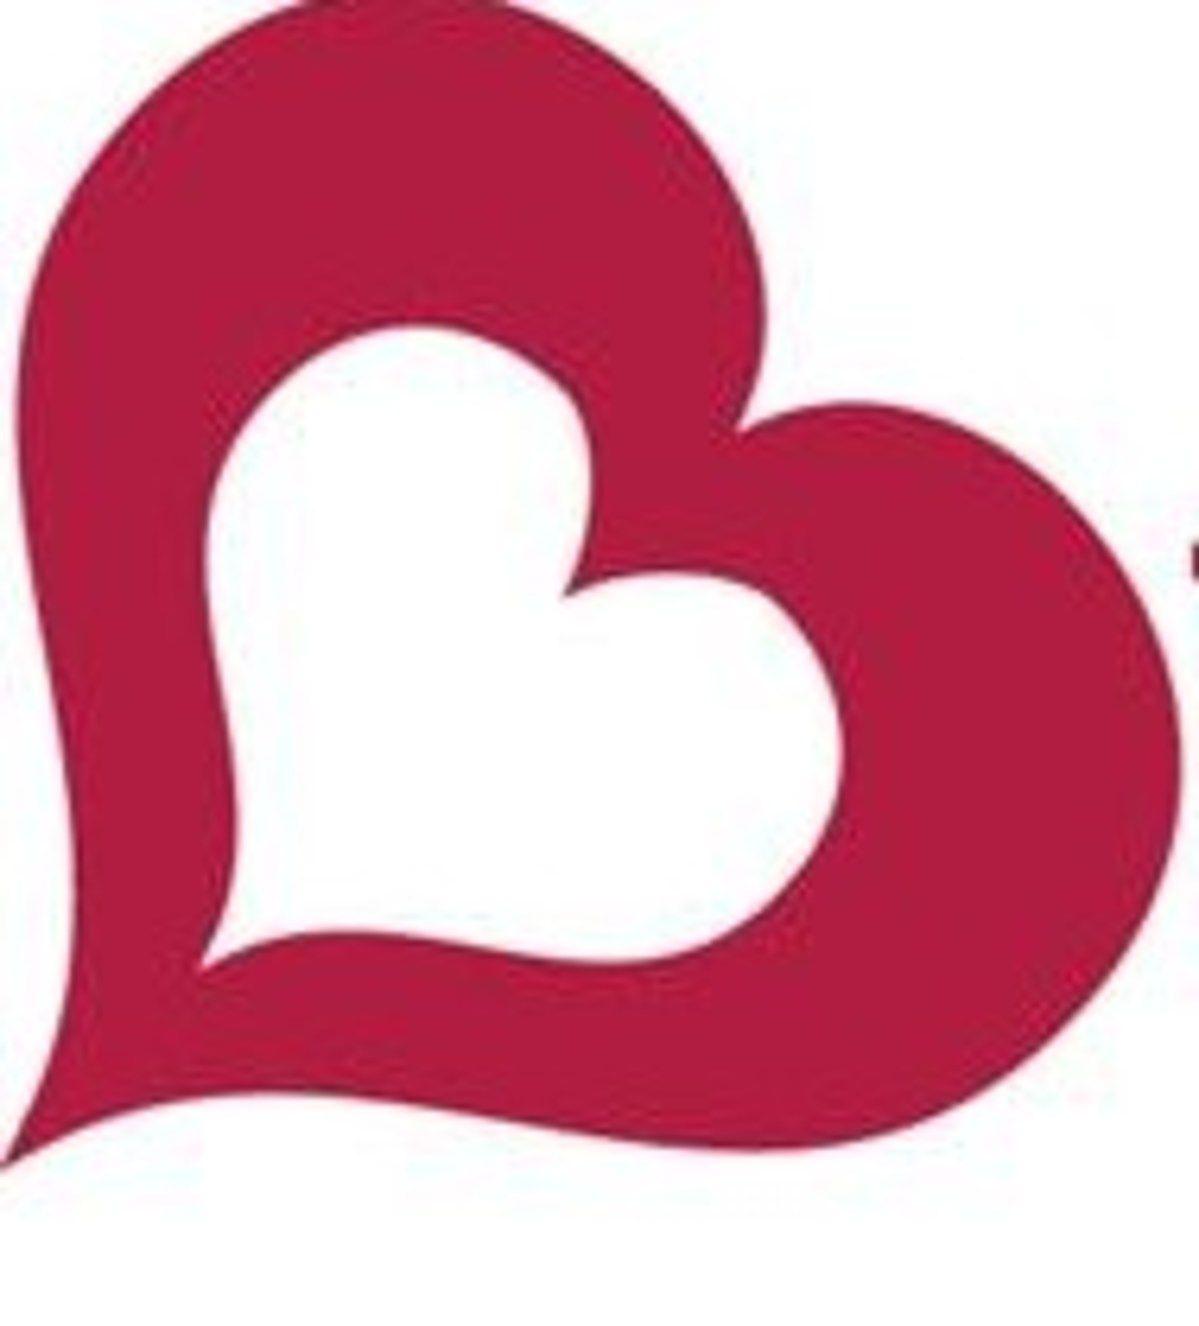 Burlingtion Logo - Burlington to replace vacant Toys R Us lot in Toms River